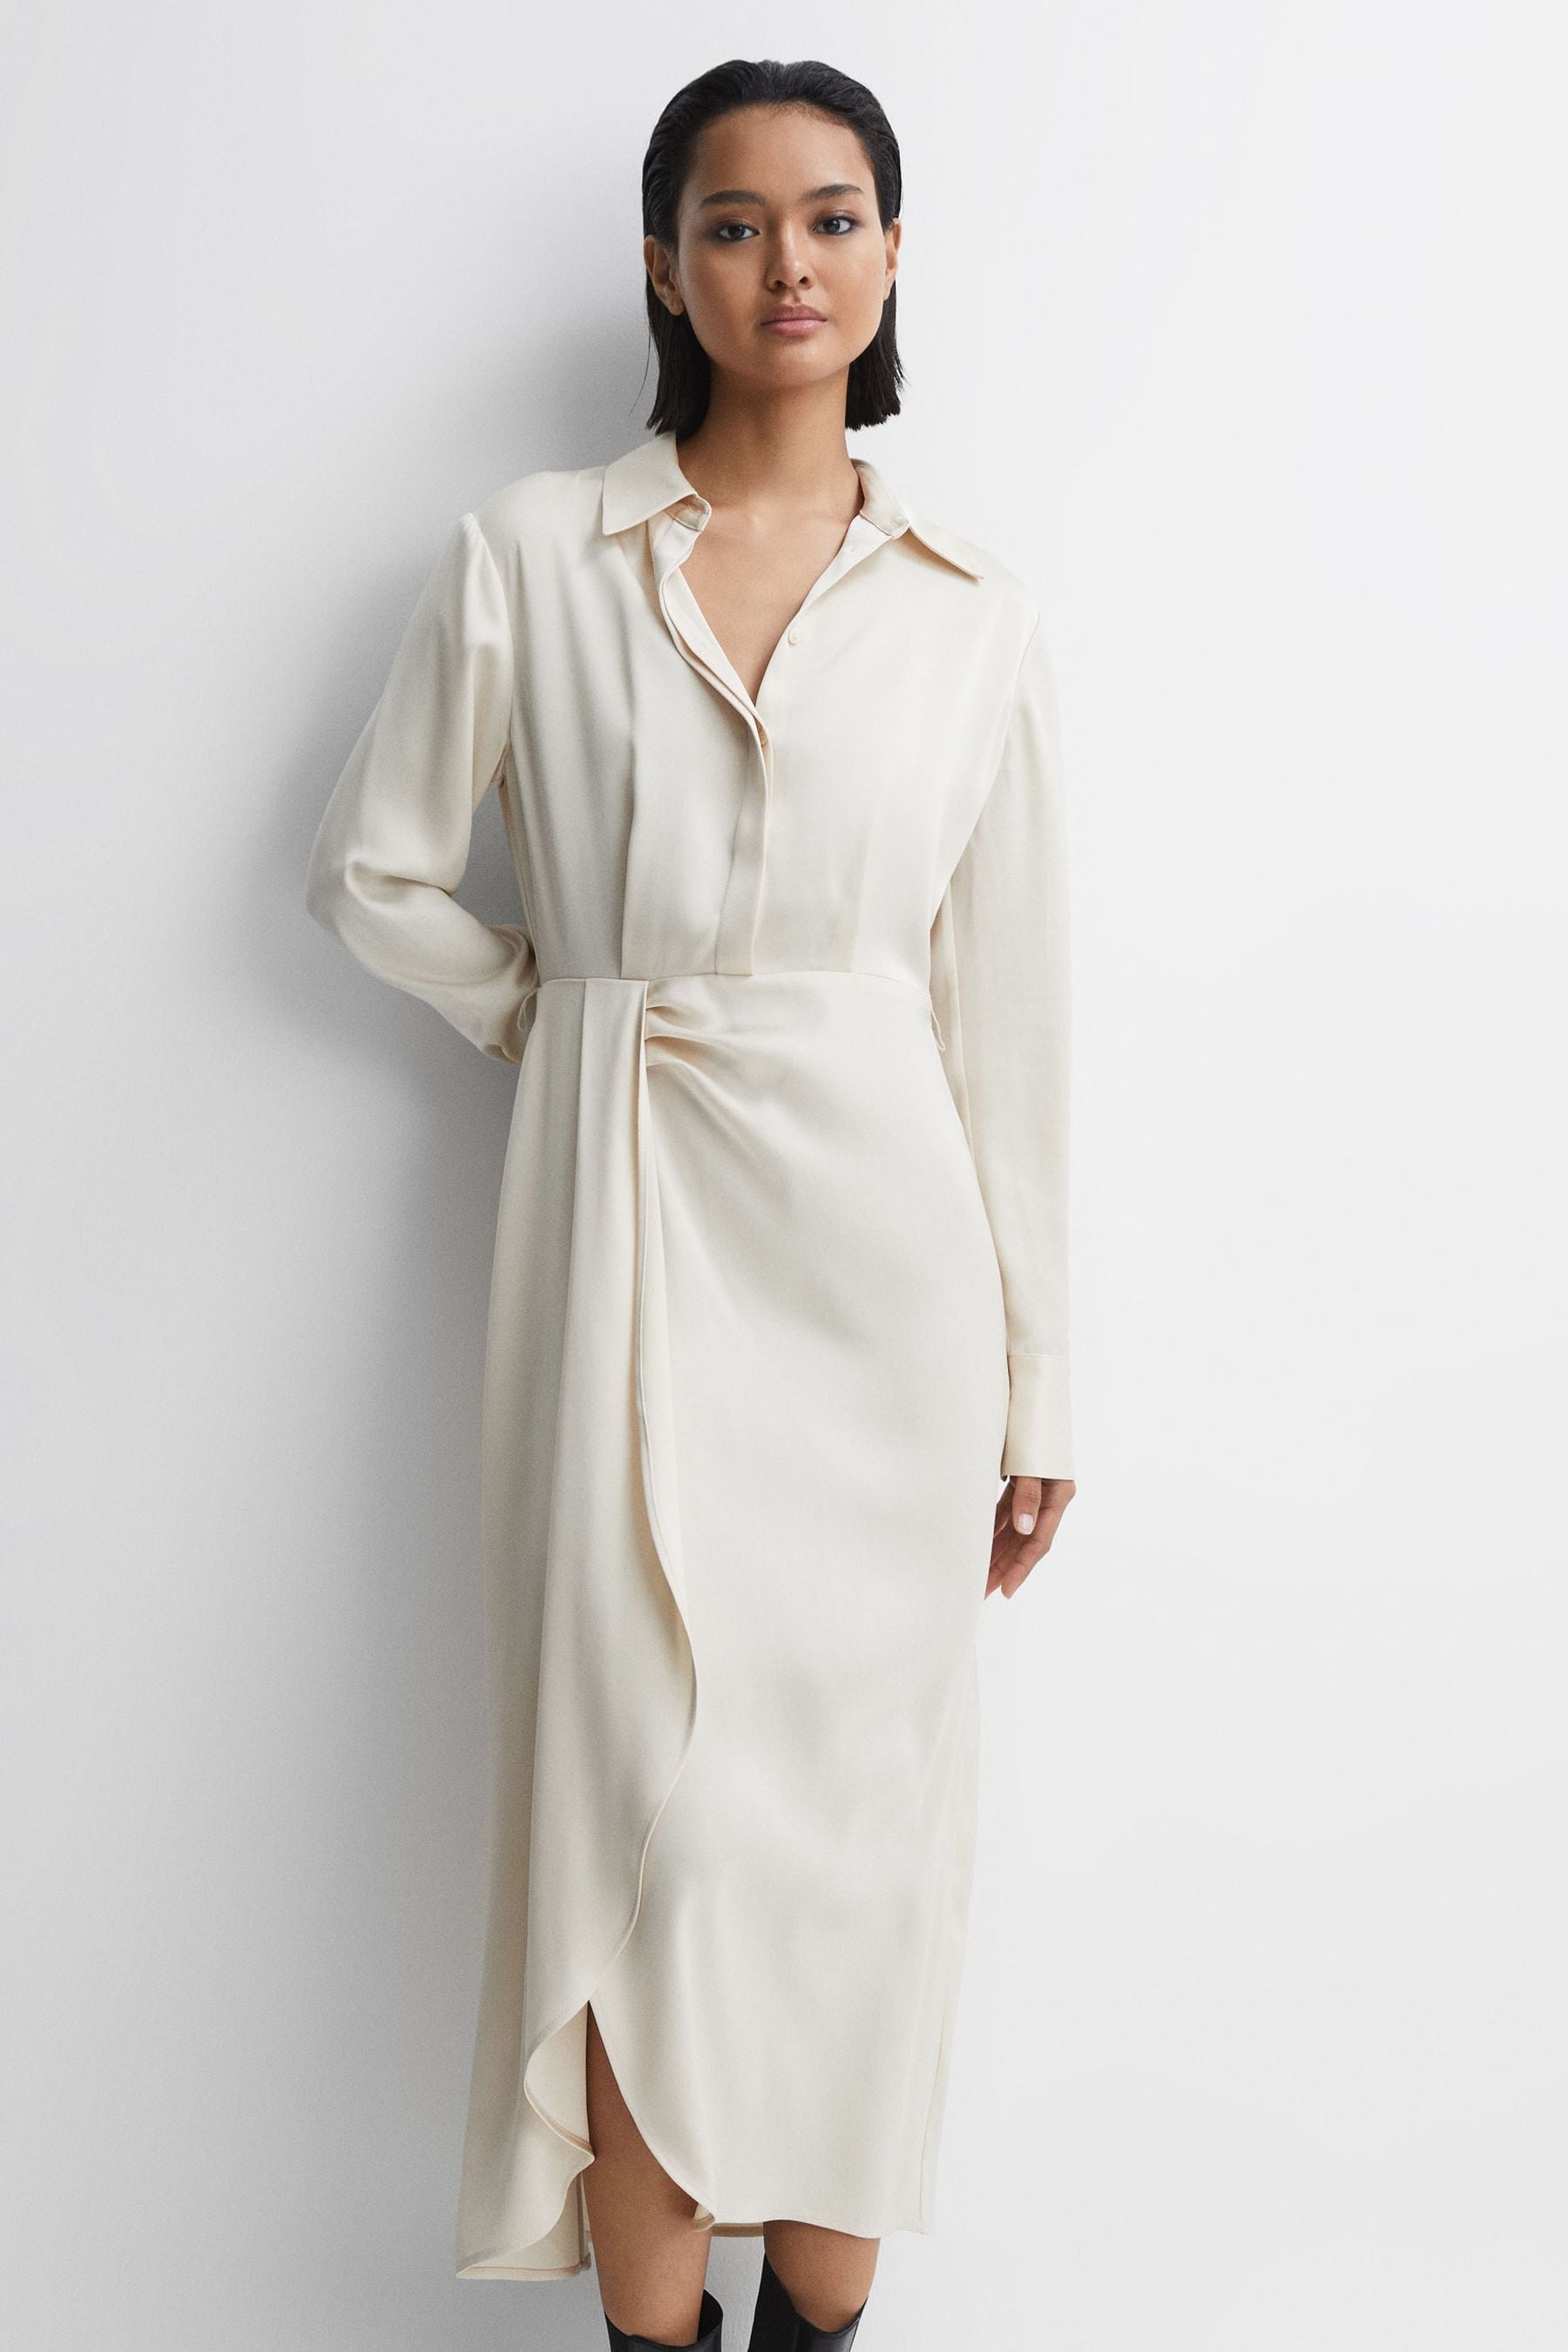 Reiss Arabella - Cream Satin Shirt-style Midi Dress, Us 6